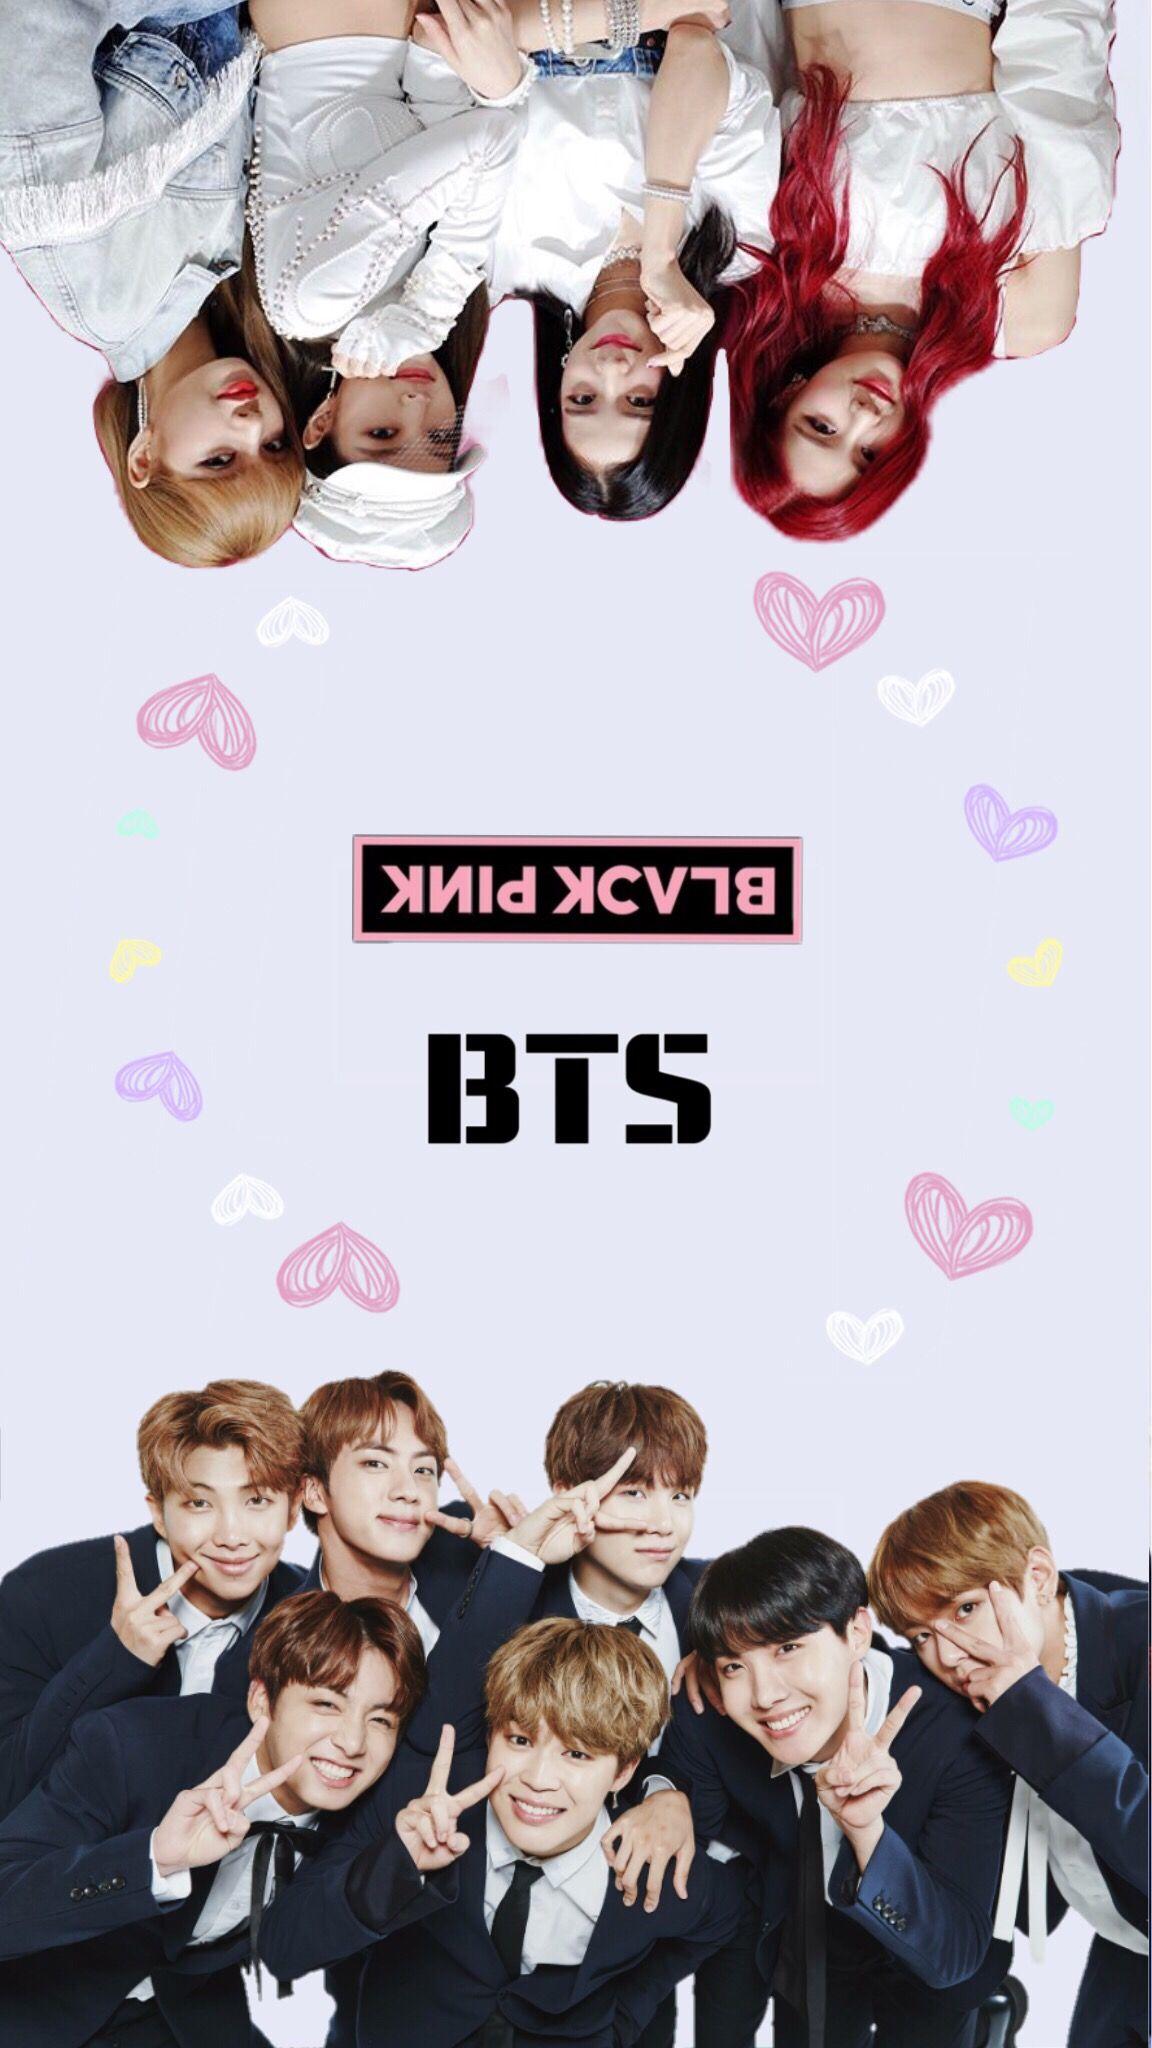 K-pop Groups Logo Pancake Art: BTS, BLACKPINK, EXO, TWICE - YouTube